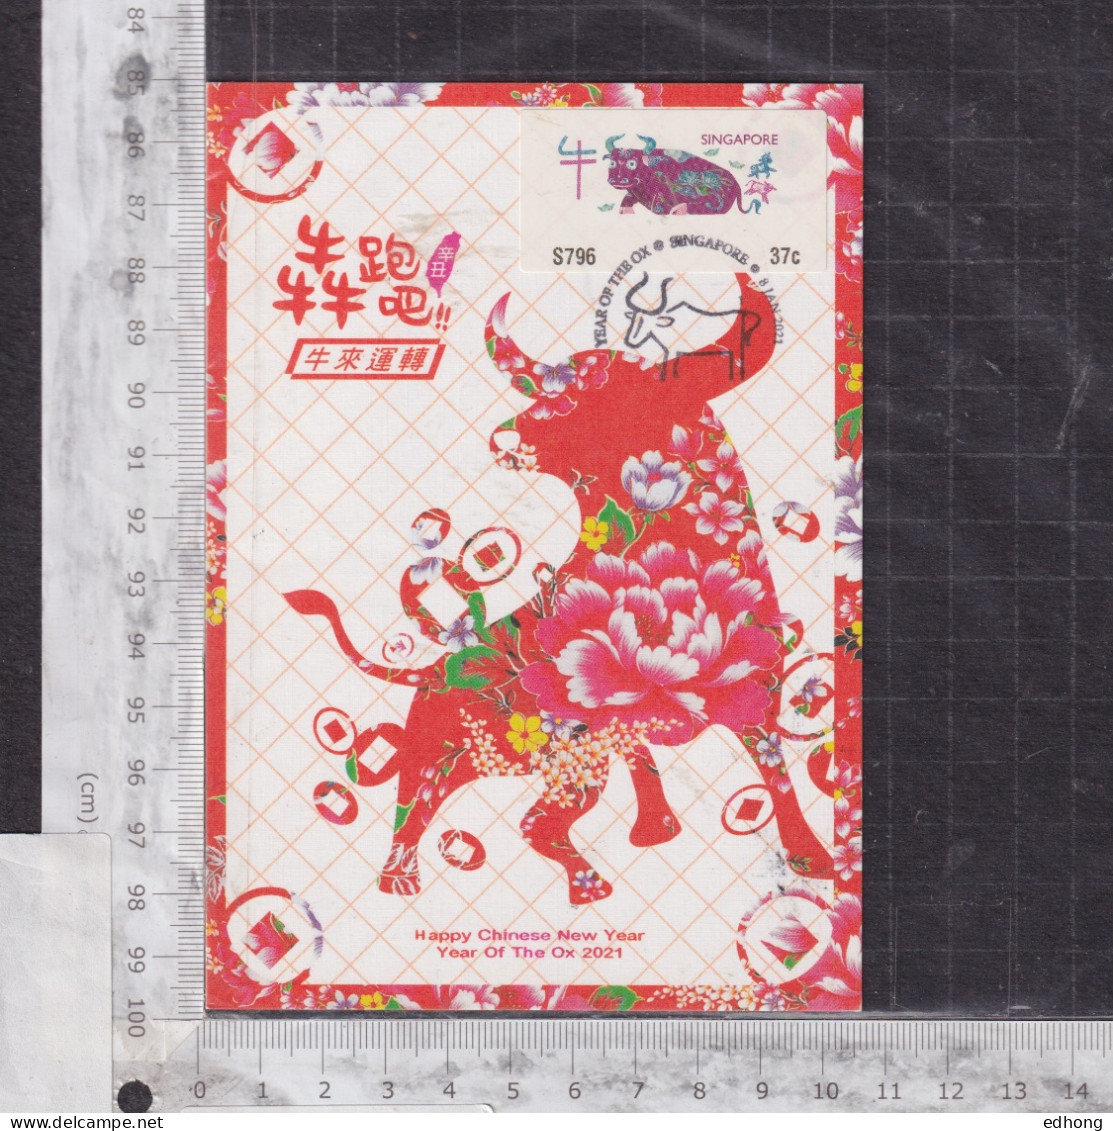 [Carte Maximum / Maximum Card / Maximumkarte] Singapore 2021 | Lunar New Year, Year Of The Ox Postage Label - Chines. Neujahr